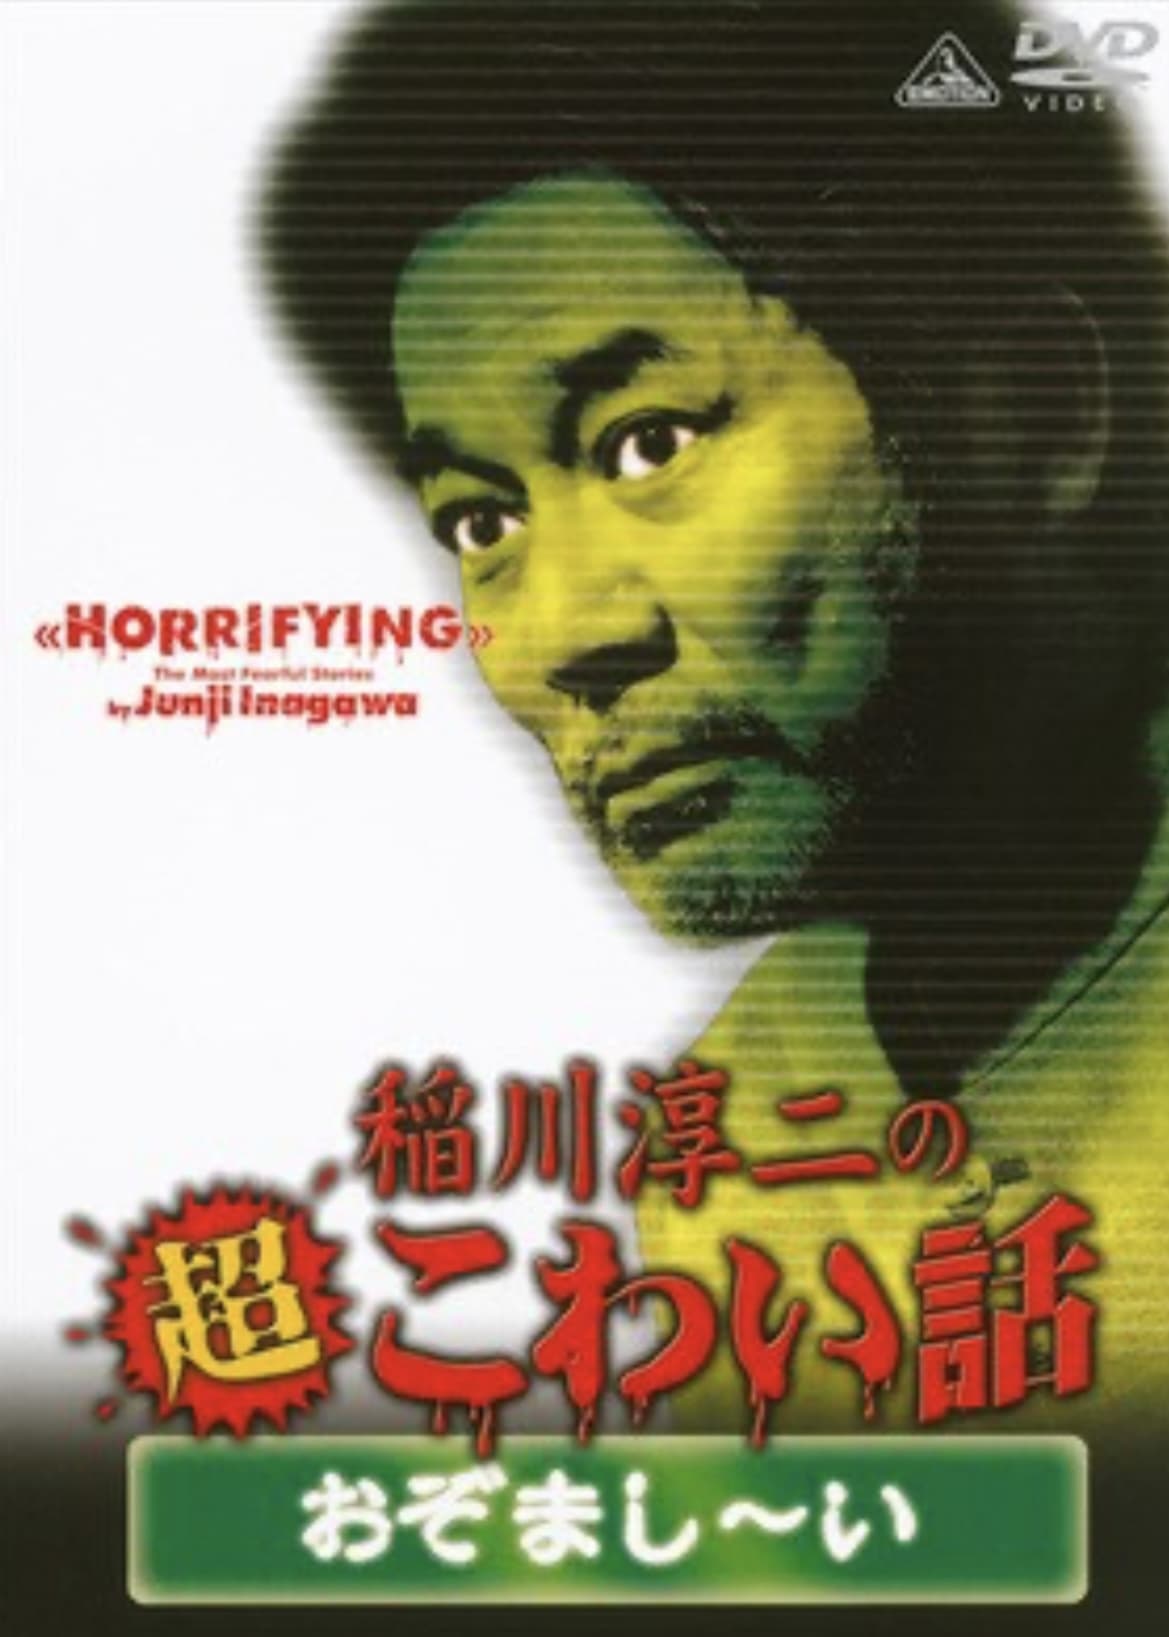 The Most Fearful Stories by Junji Inagawa: Horrifying